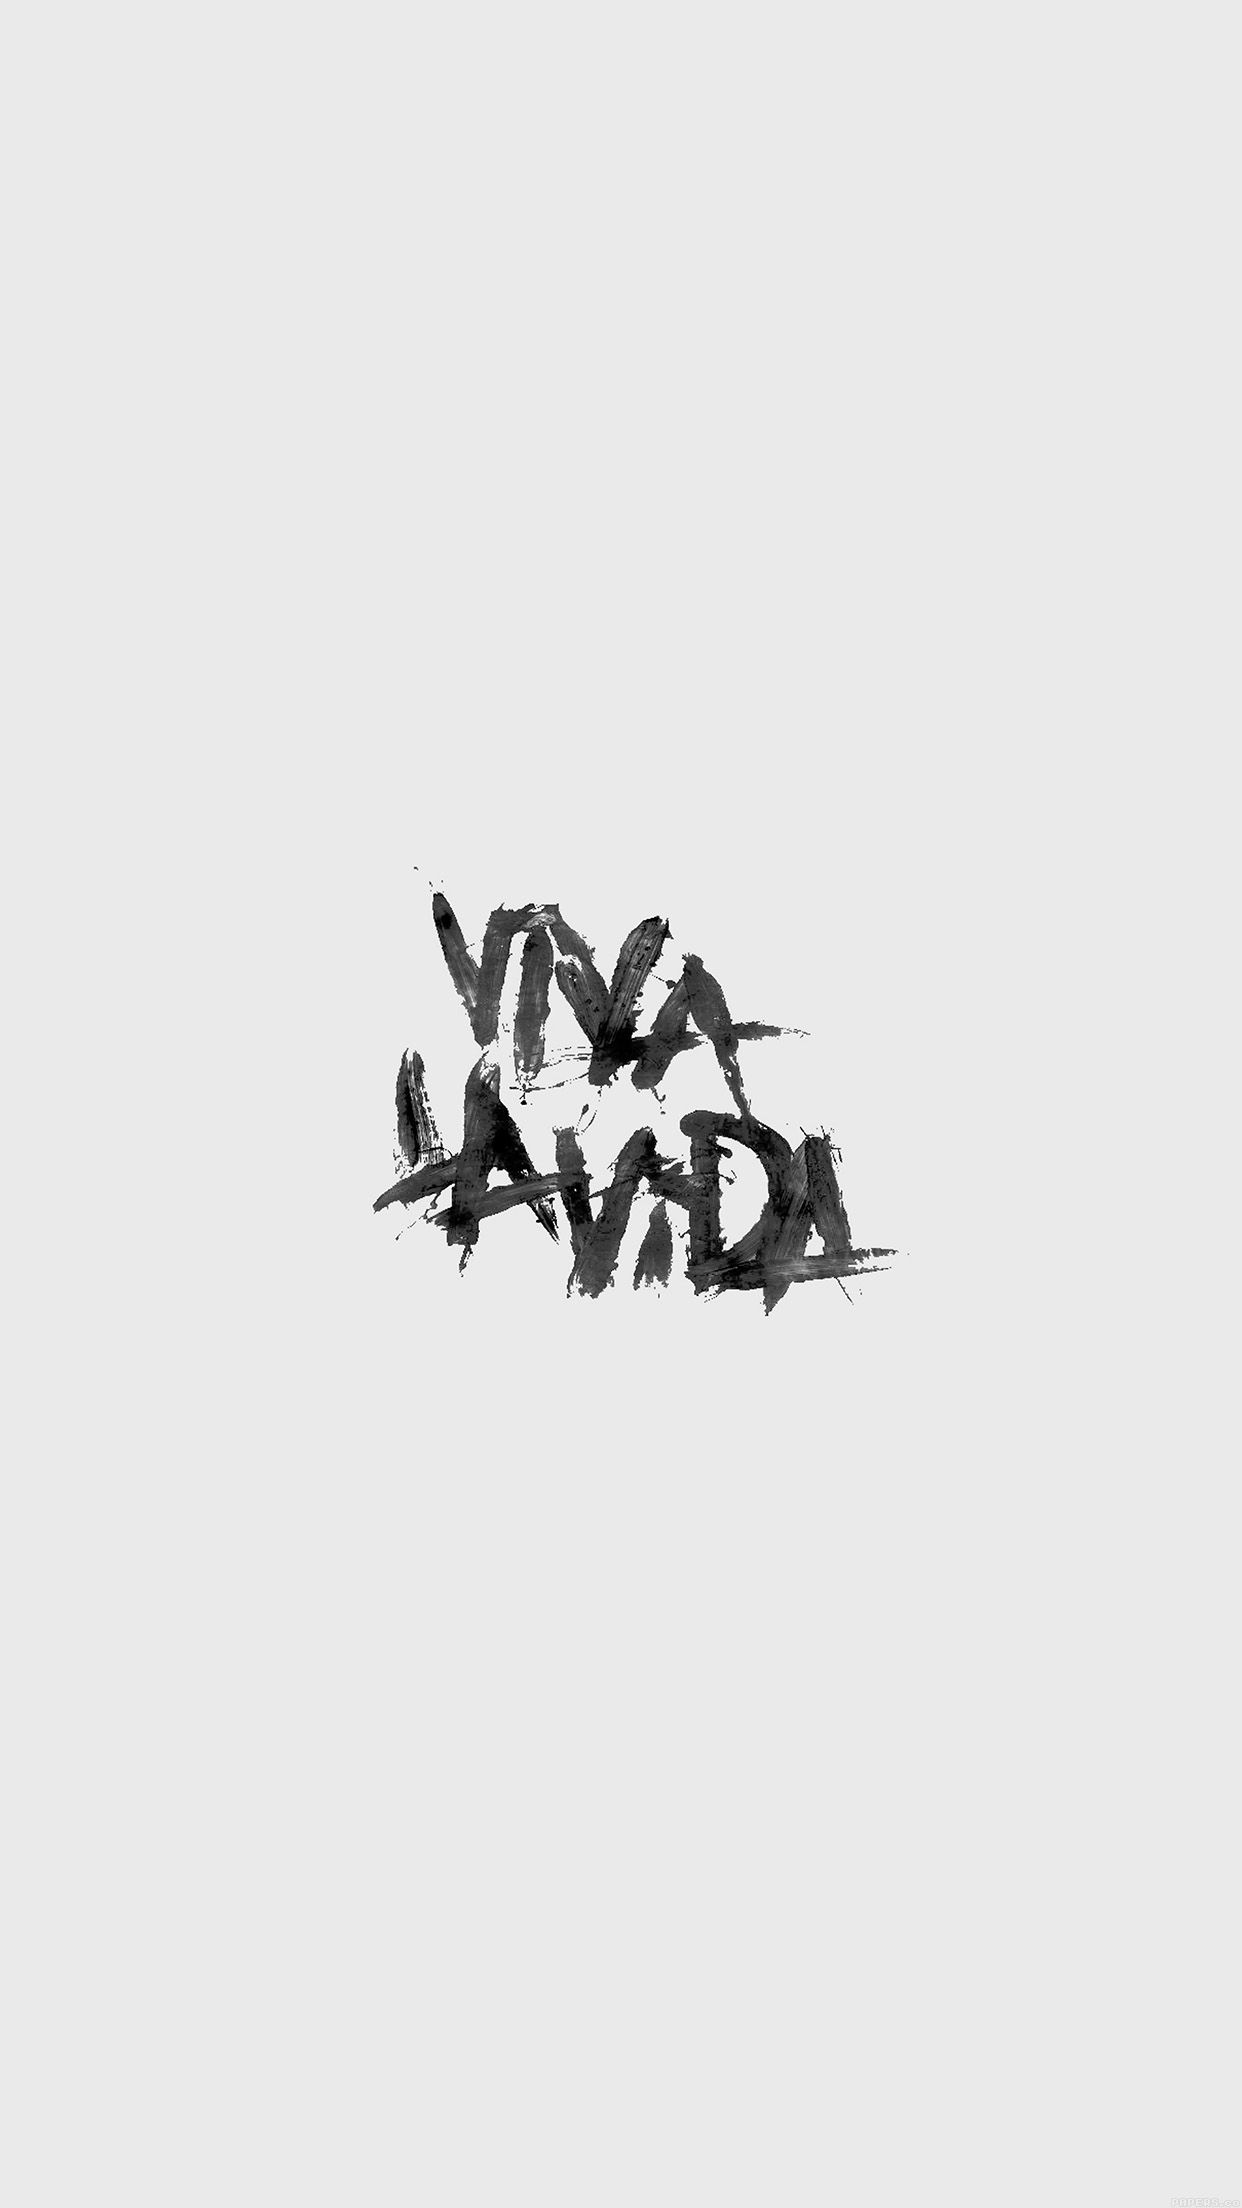 Viva La Vida Logo Music Art White IPhone 6 Wallpaper Download. IPhone Wallpaper, IPad Wallpaper One Stop. Coldplay Art, Coldplay Wallpaper, IPhone 6 Wallpaper